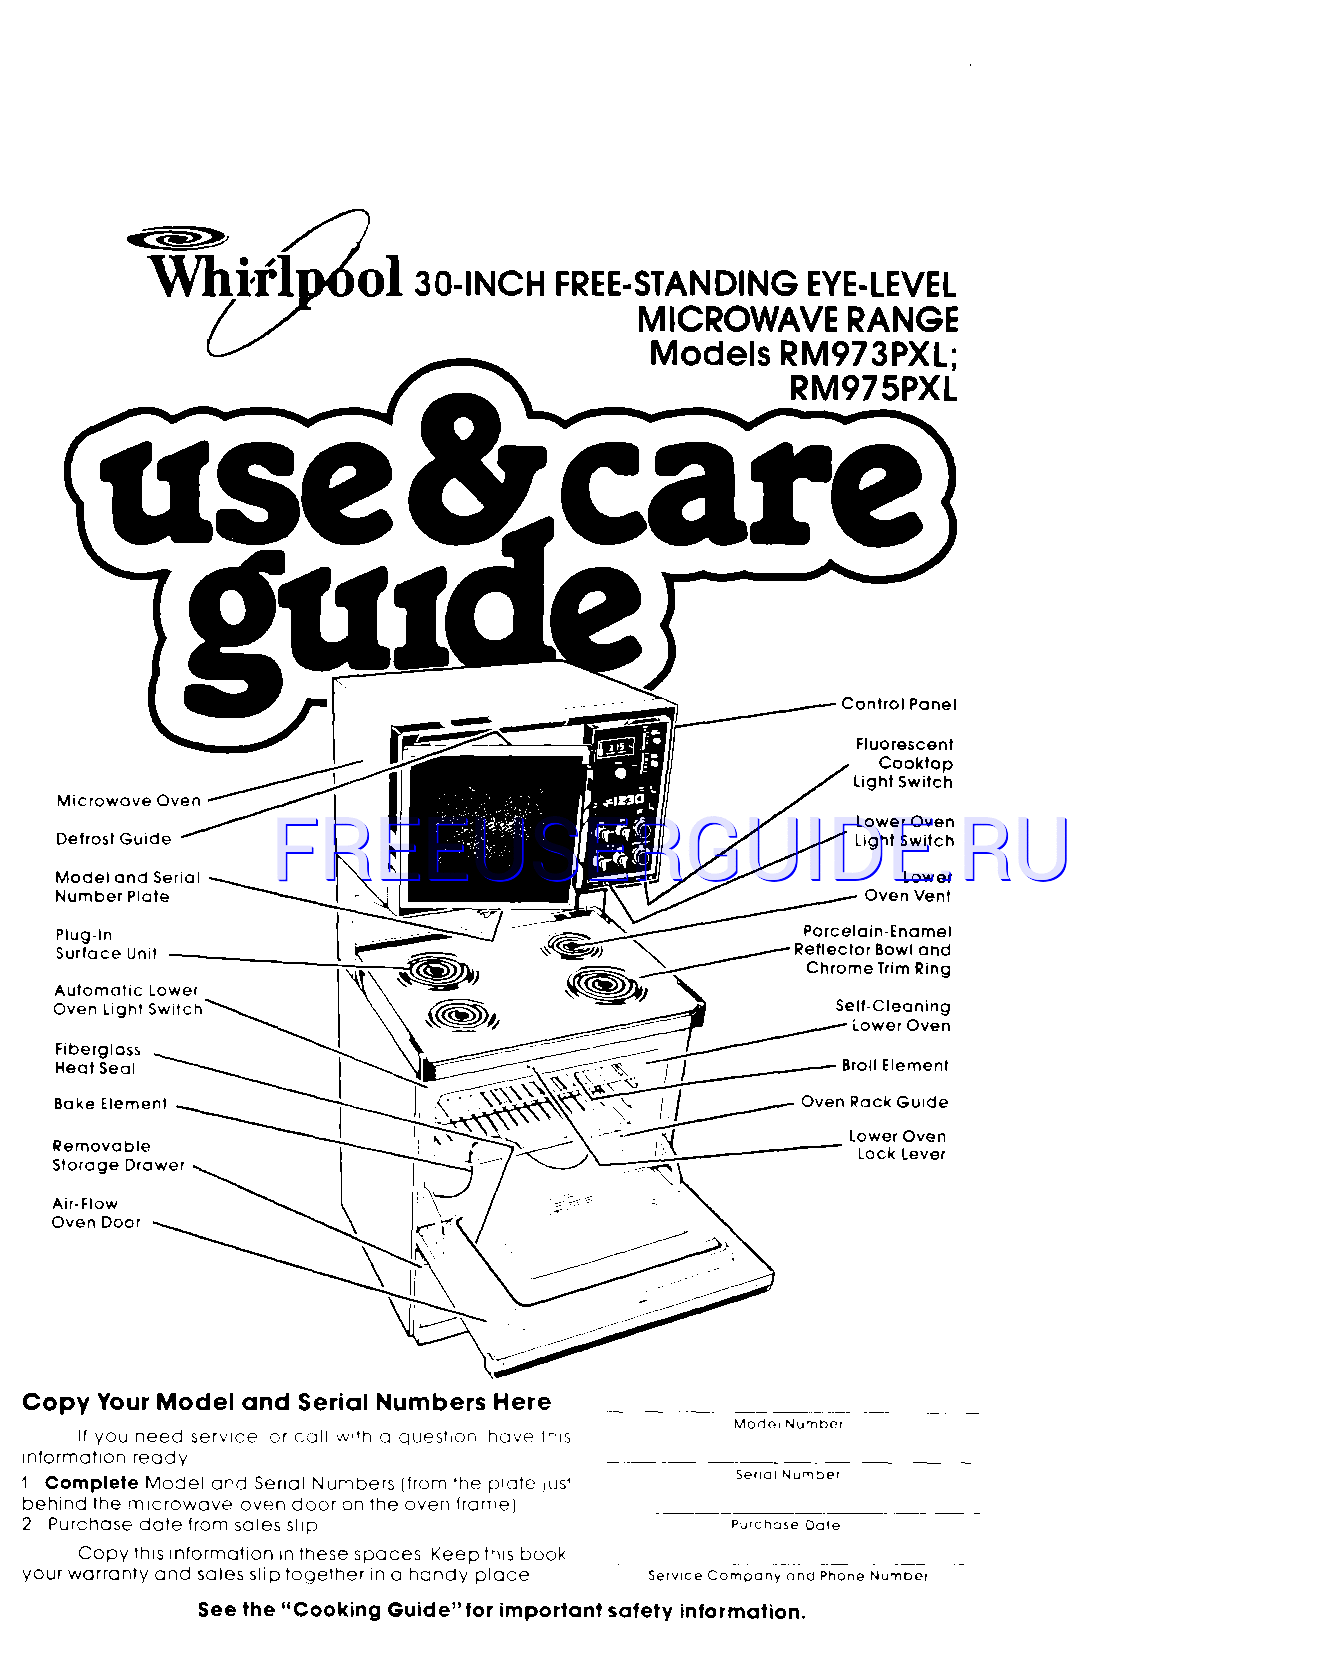 Leer online Manual de usuario para Whirlpool RM973PXL (Page 1)